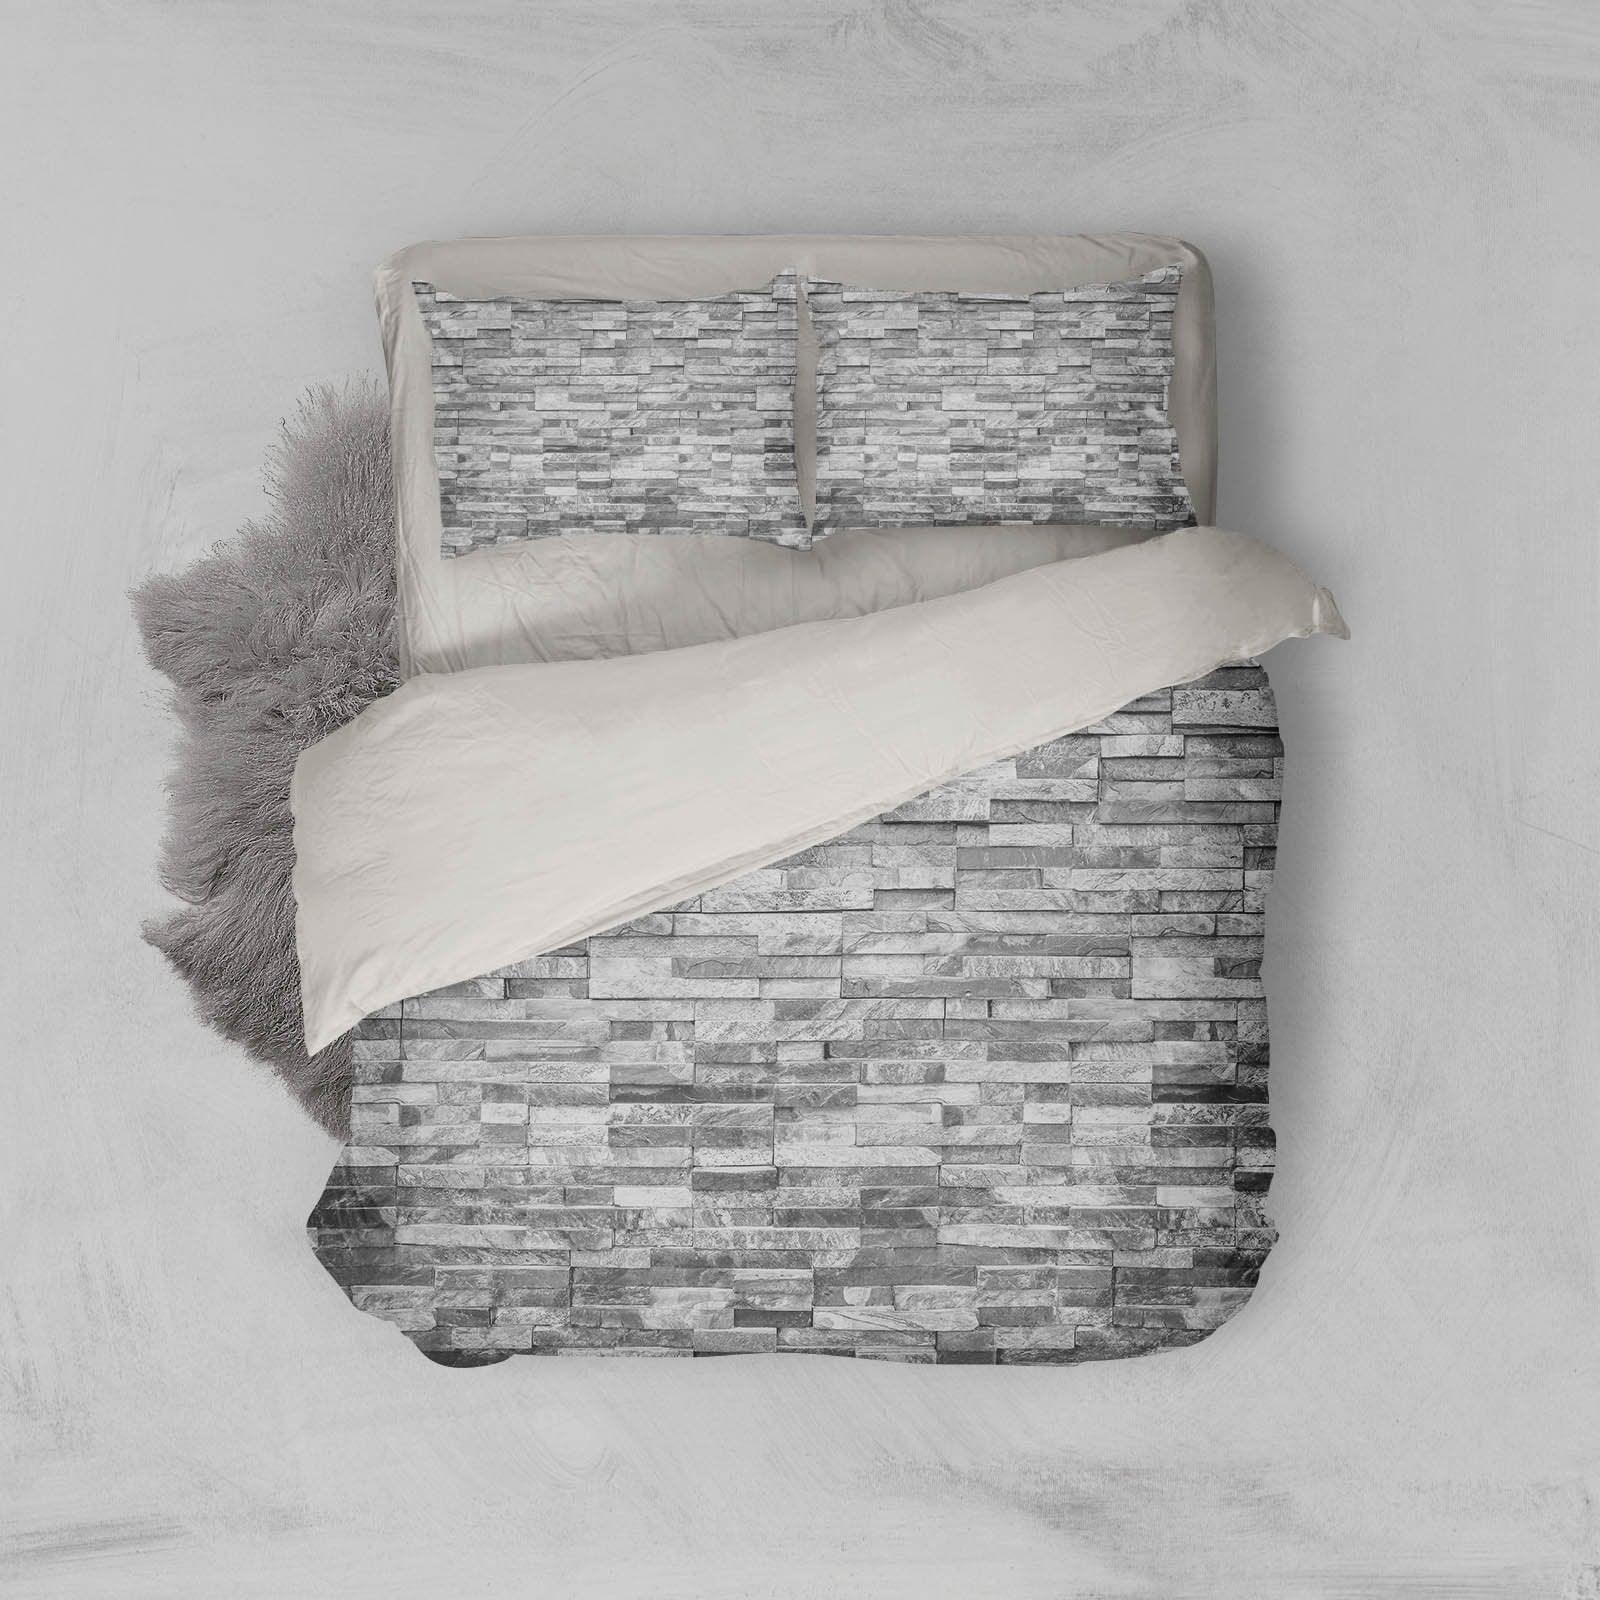 3D A strip of rock Bedding Set Quilt Cover Quilt Duvet Cover ,Pillowcases Personalized  Bedding,Queen, King ,Full, Double 3 Pcs- Jess Art Decoration